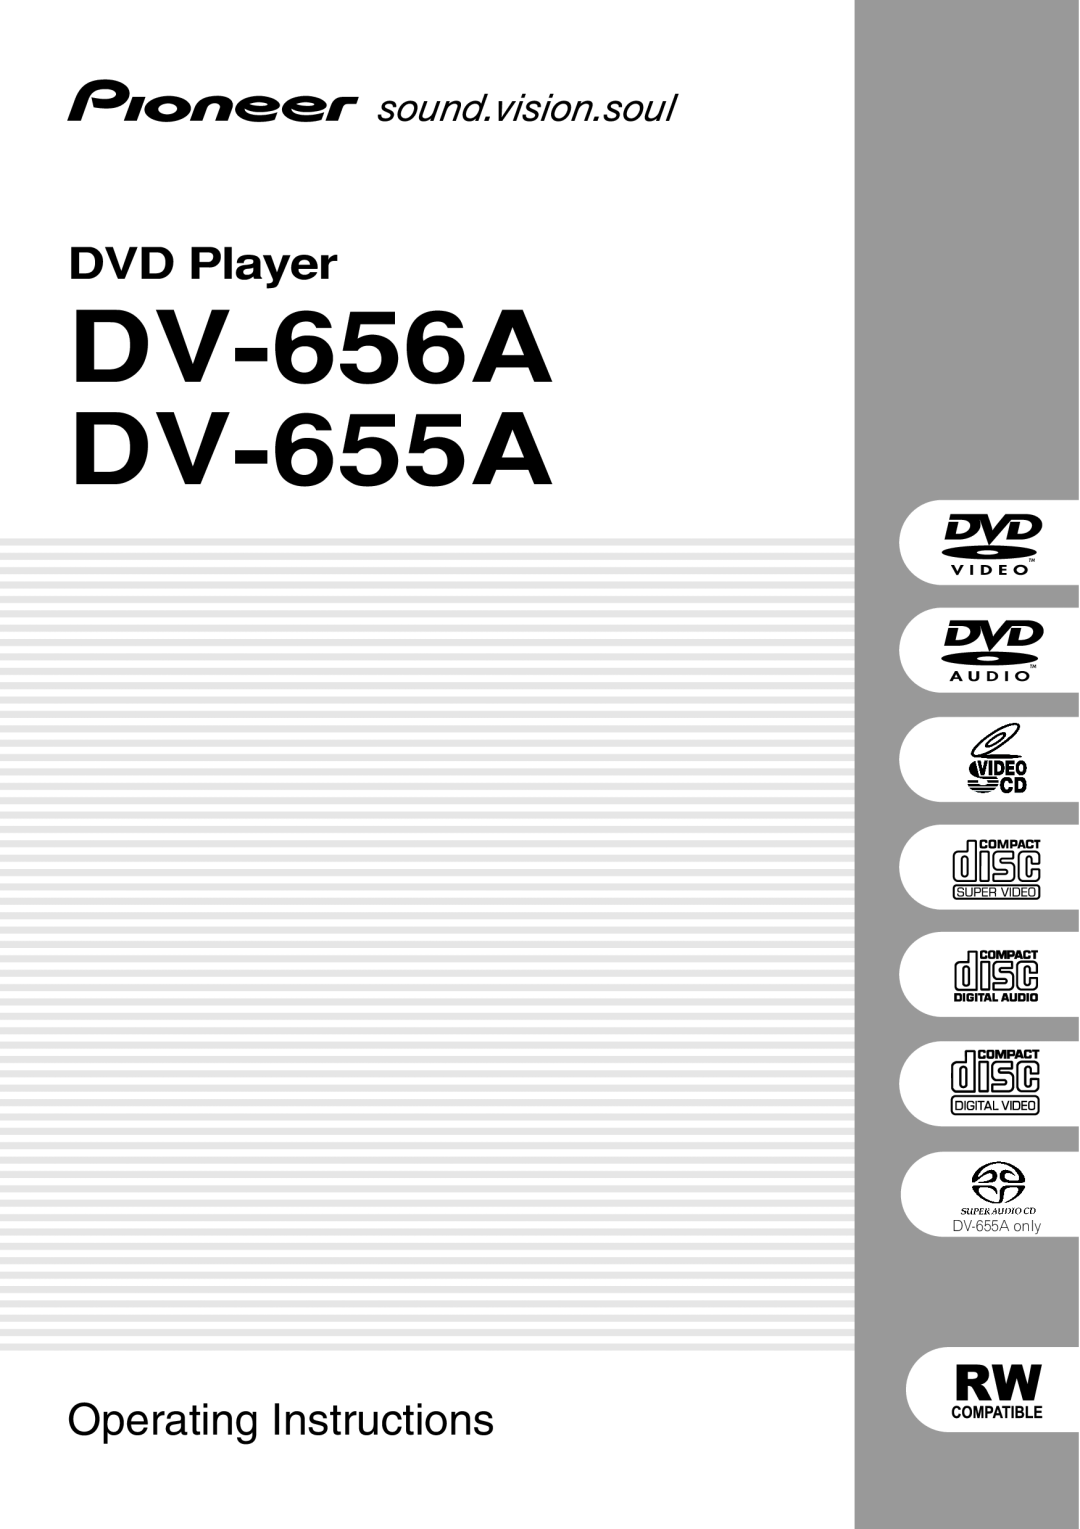 Pioneer operating instructions DV-656A DV-655A, DVD Player, Operating Instructions 